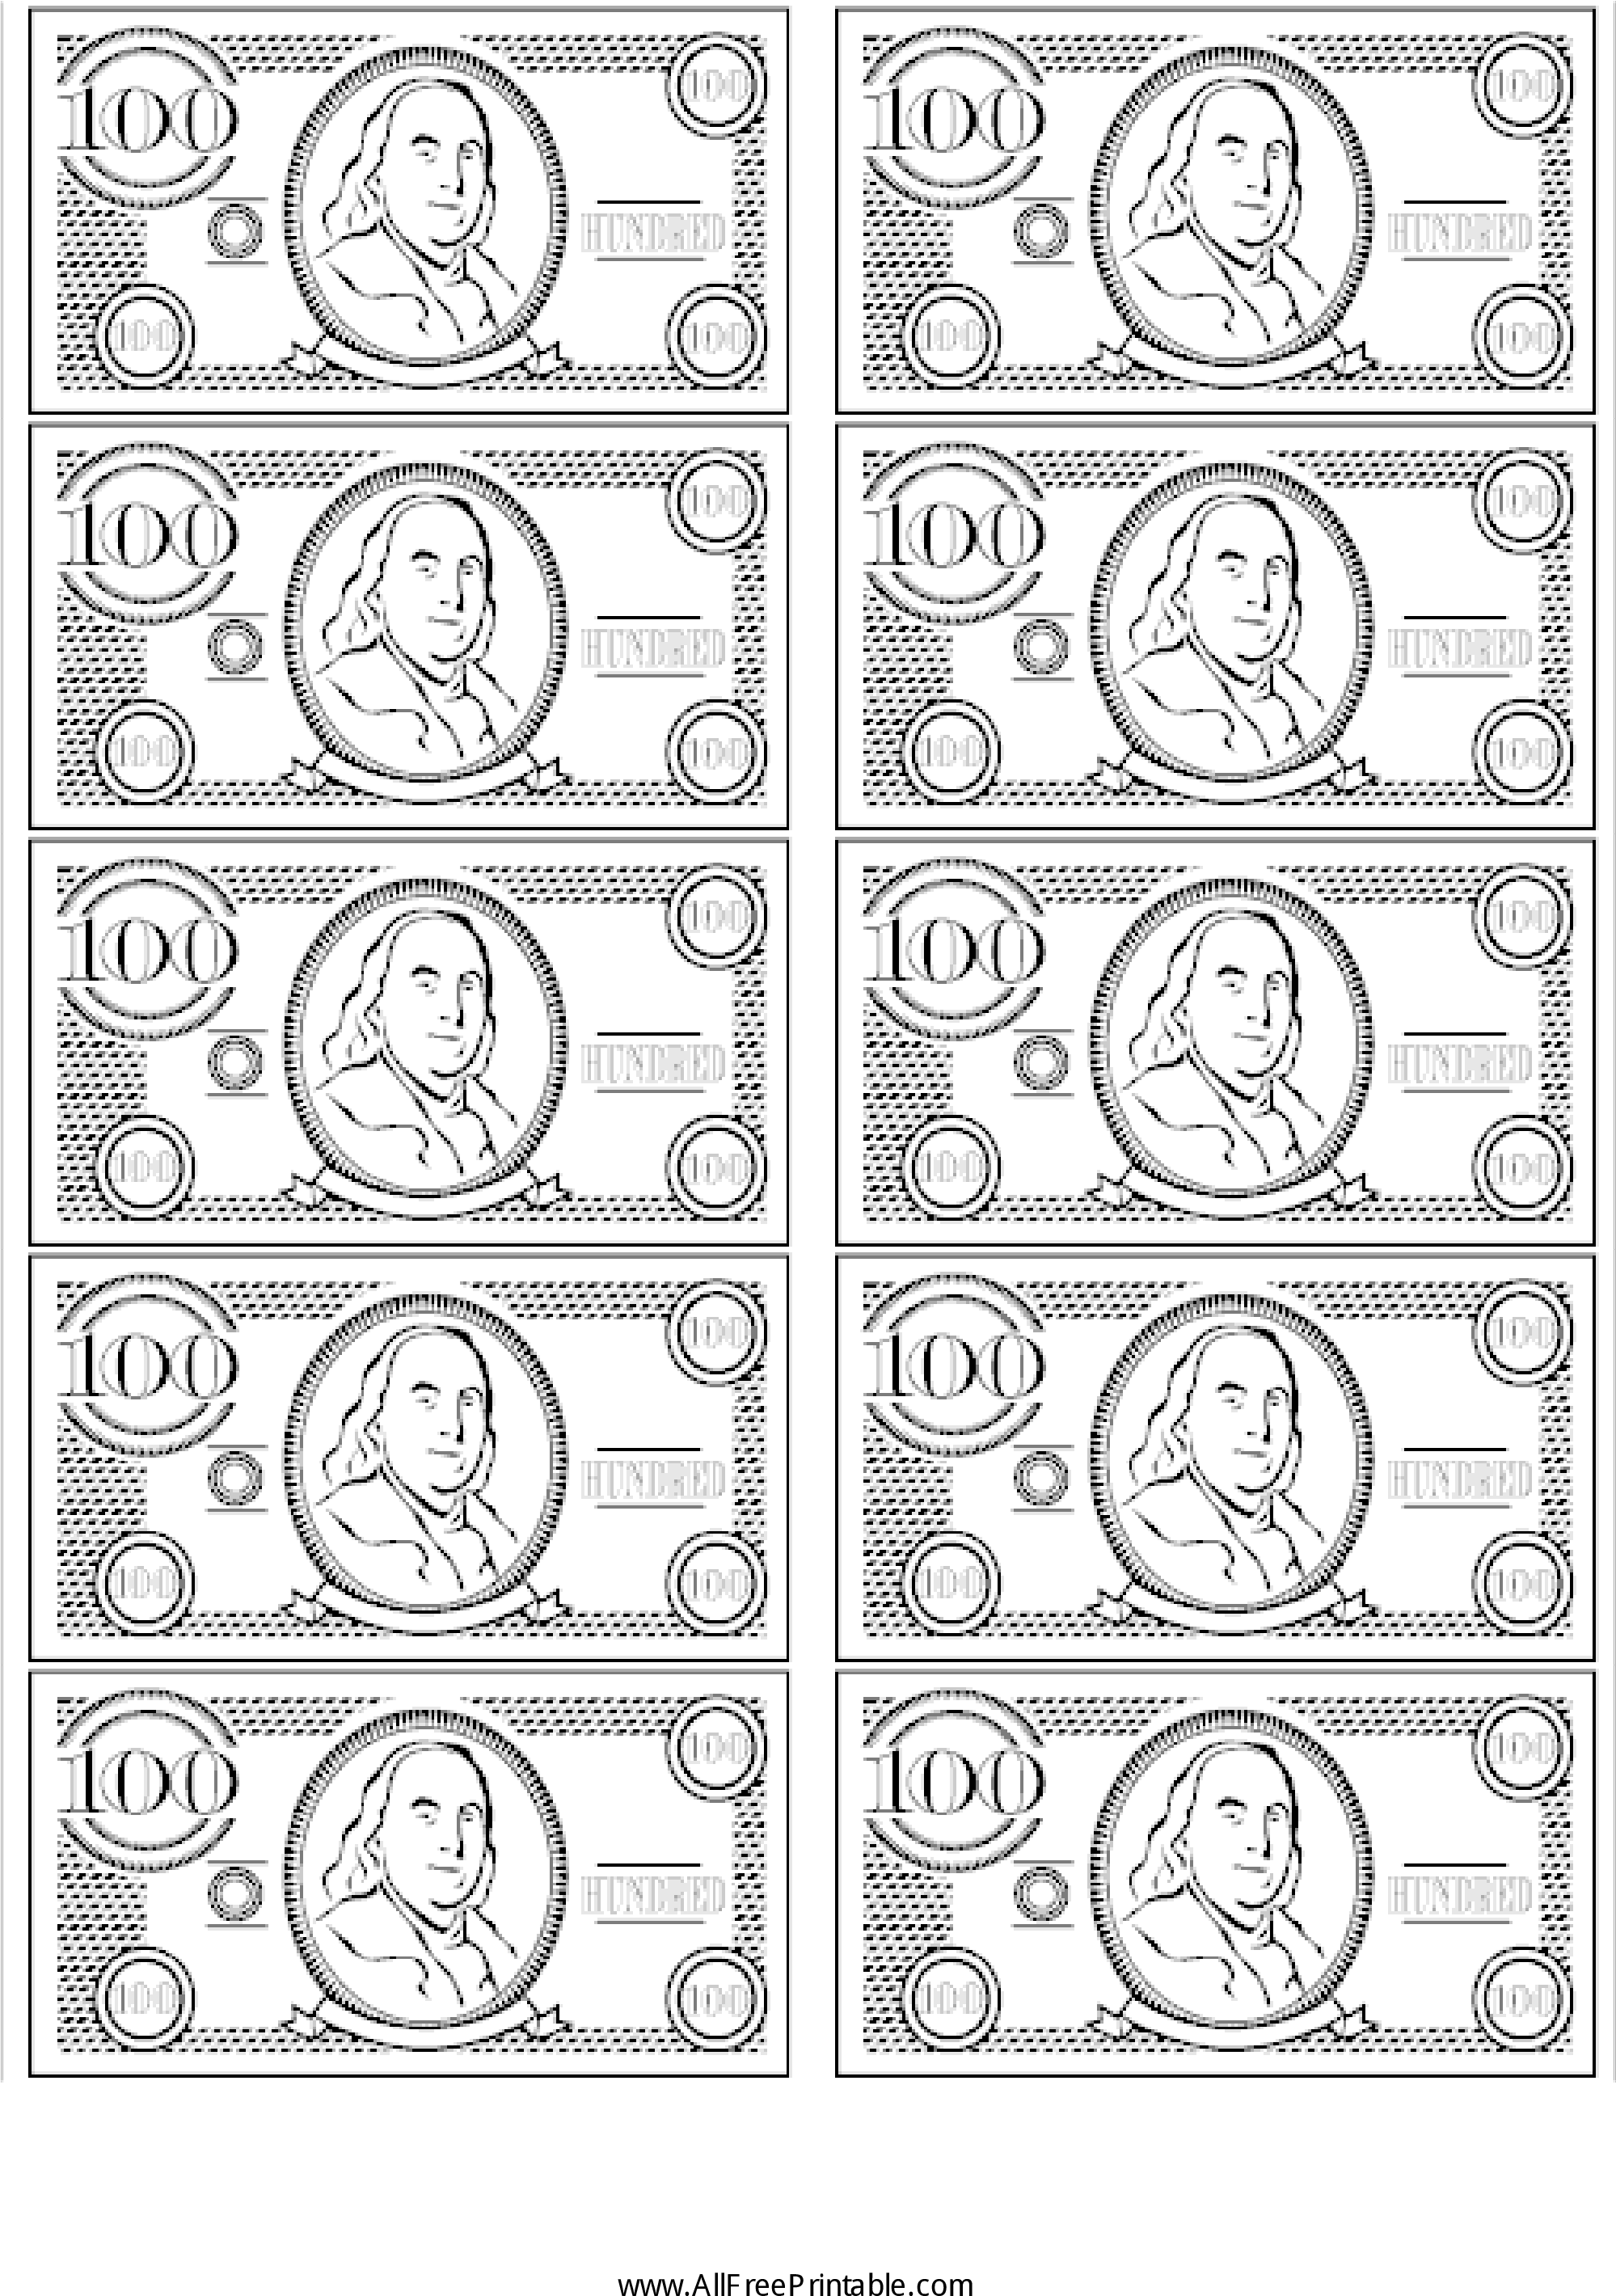 100 Bill Fake Money Main Image Printable Play Money Black And White 